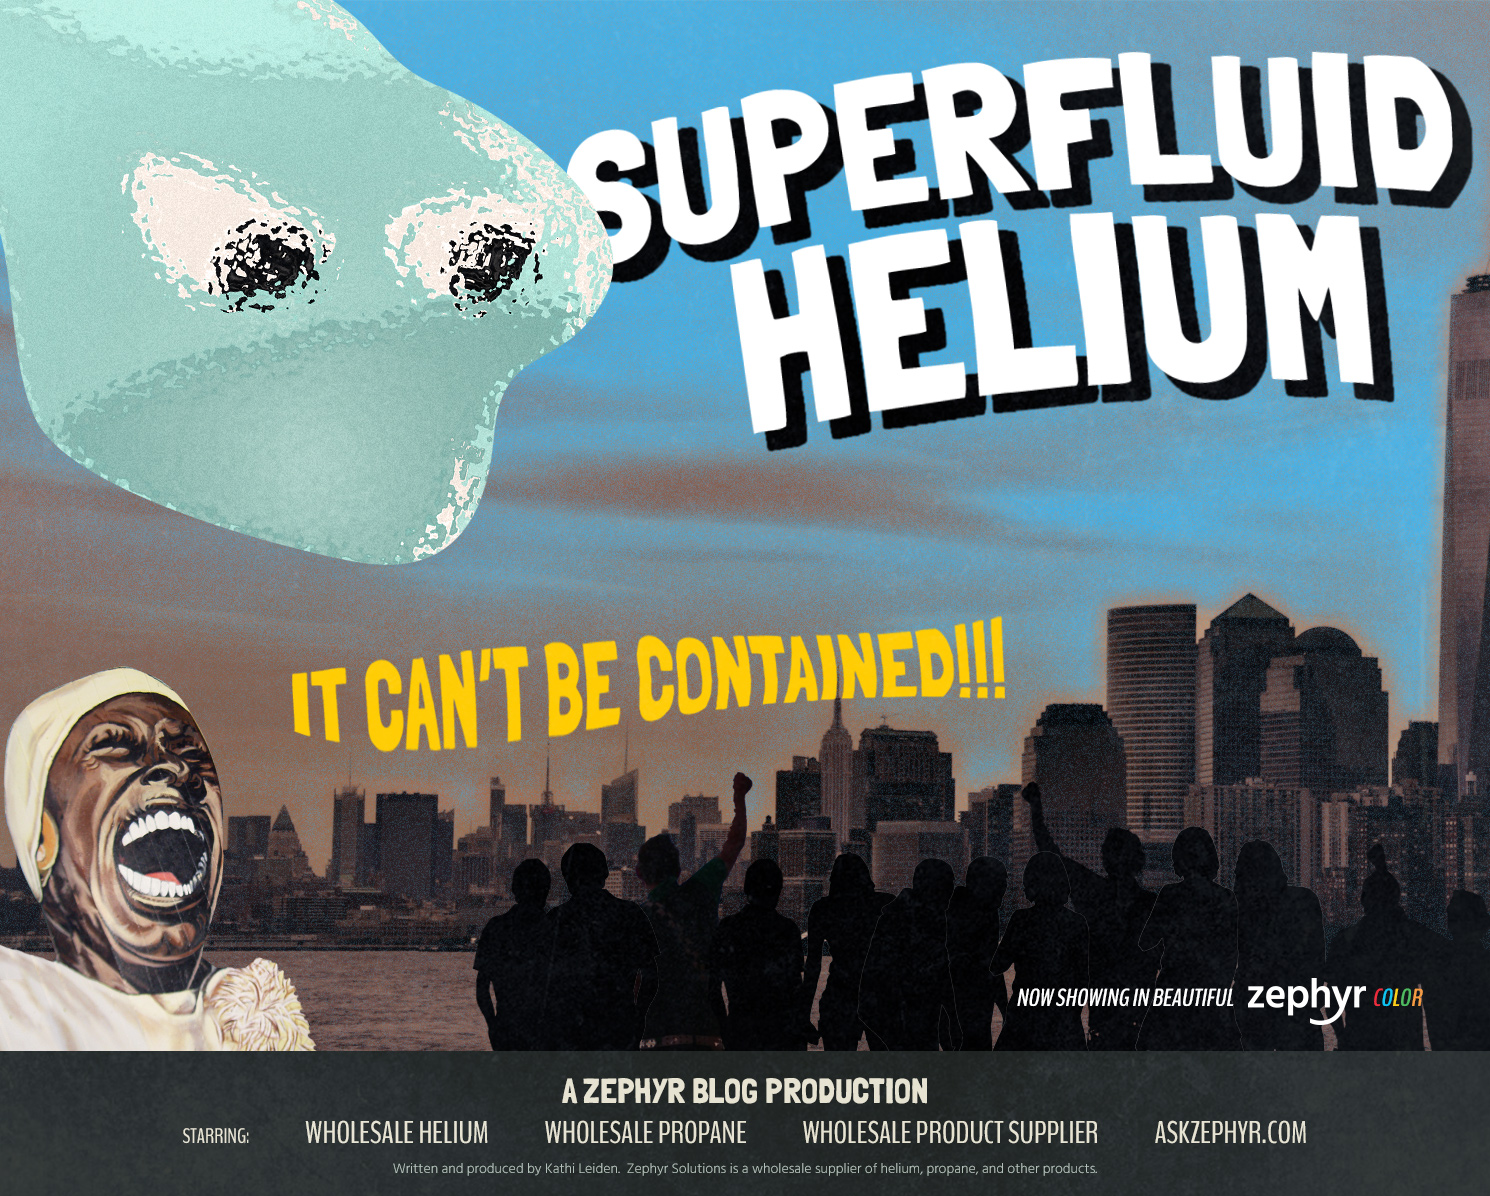 Superfluid helium acts unlike anything else on earth